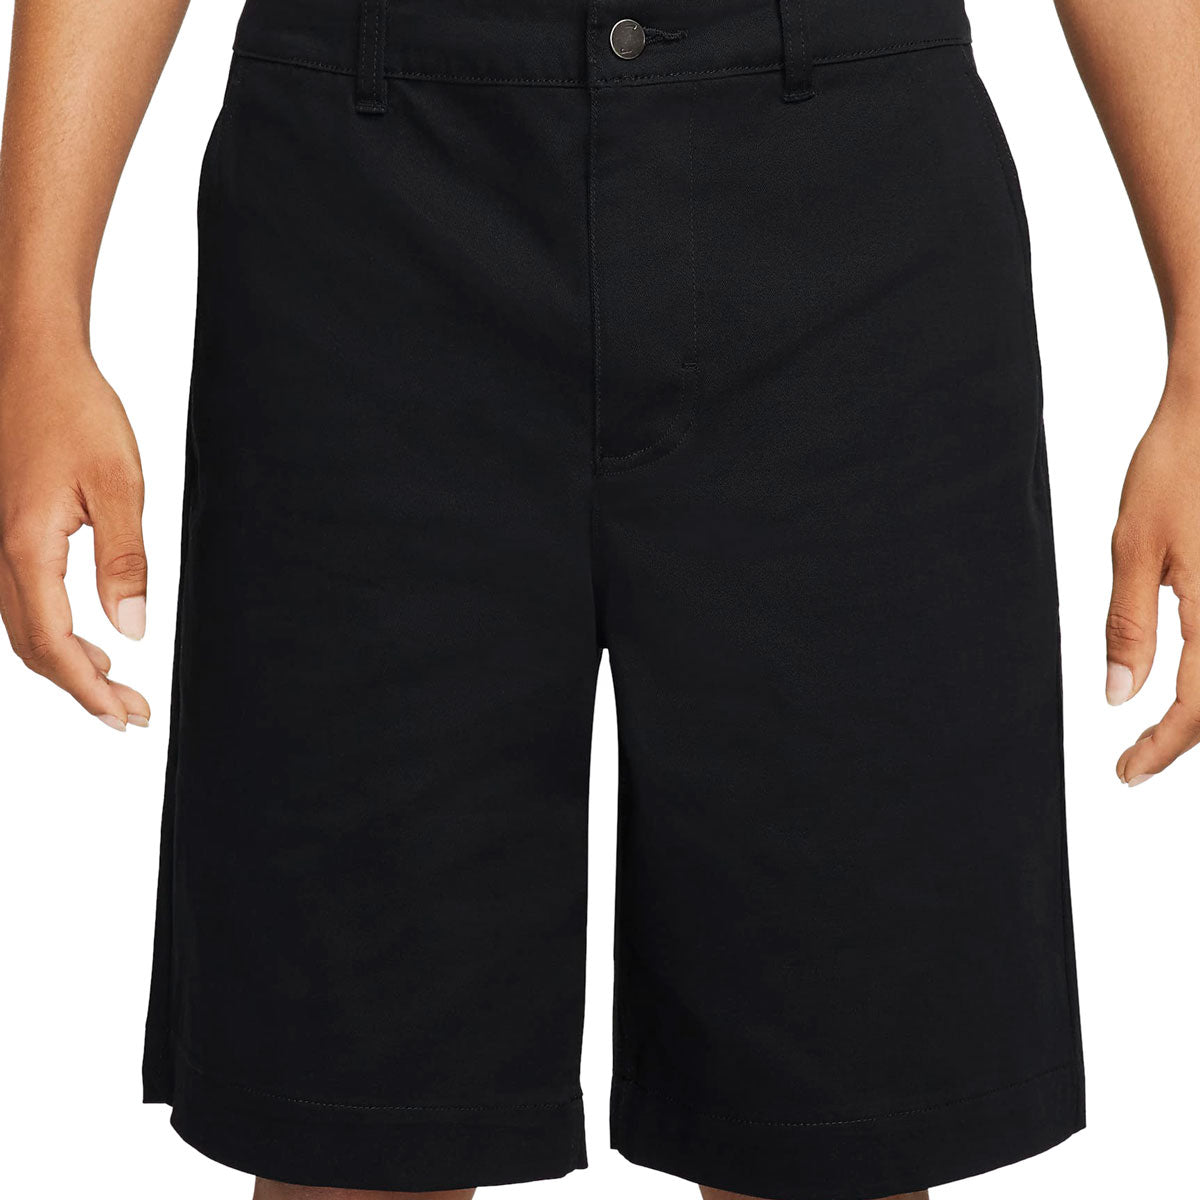 Nike SB El Chino Shorts - Black image 2